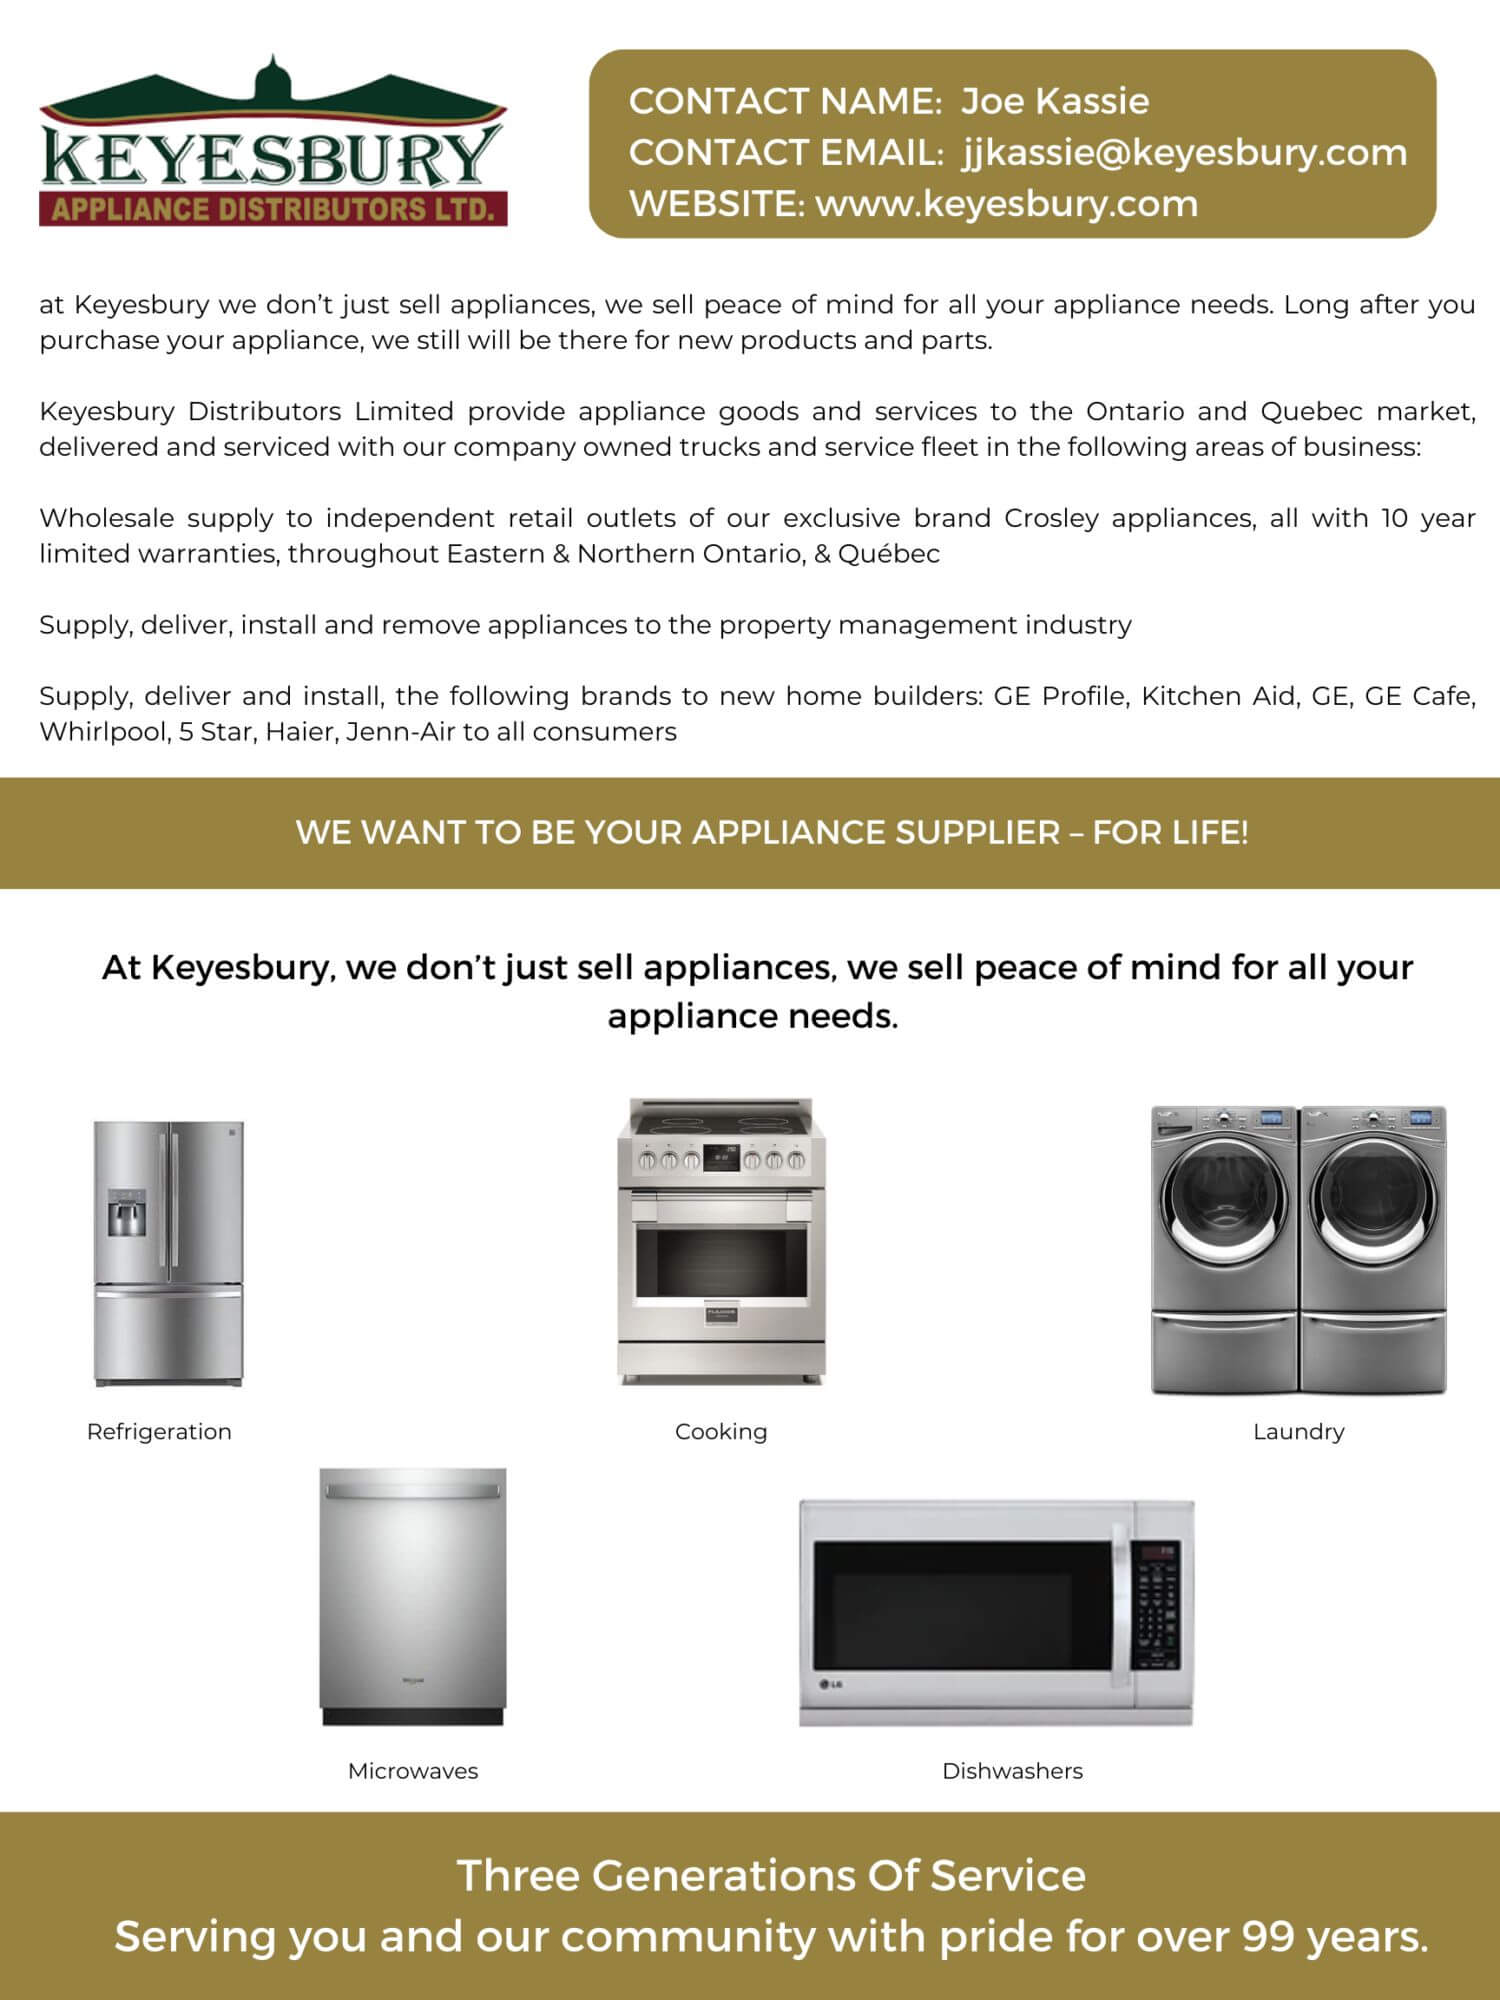 Keyesbury Appliance Distributors